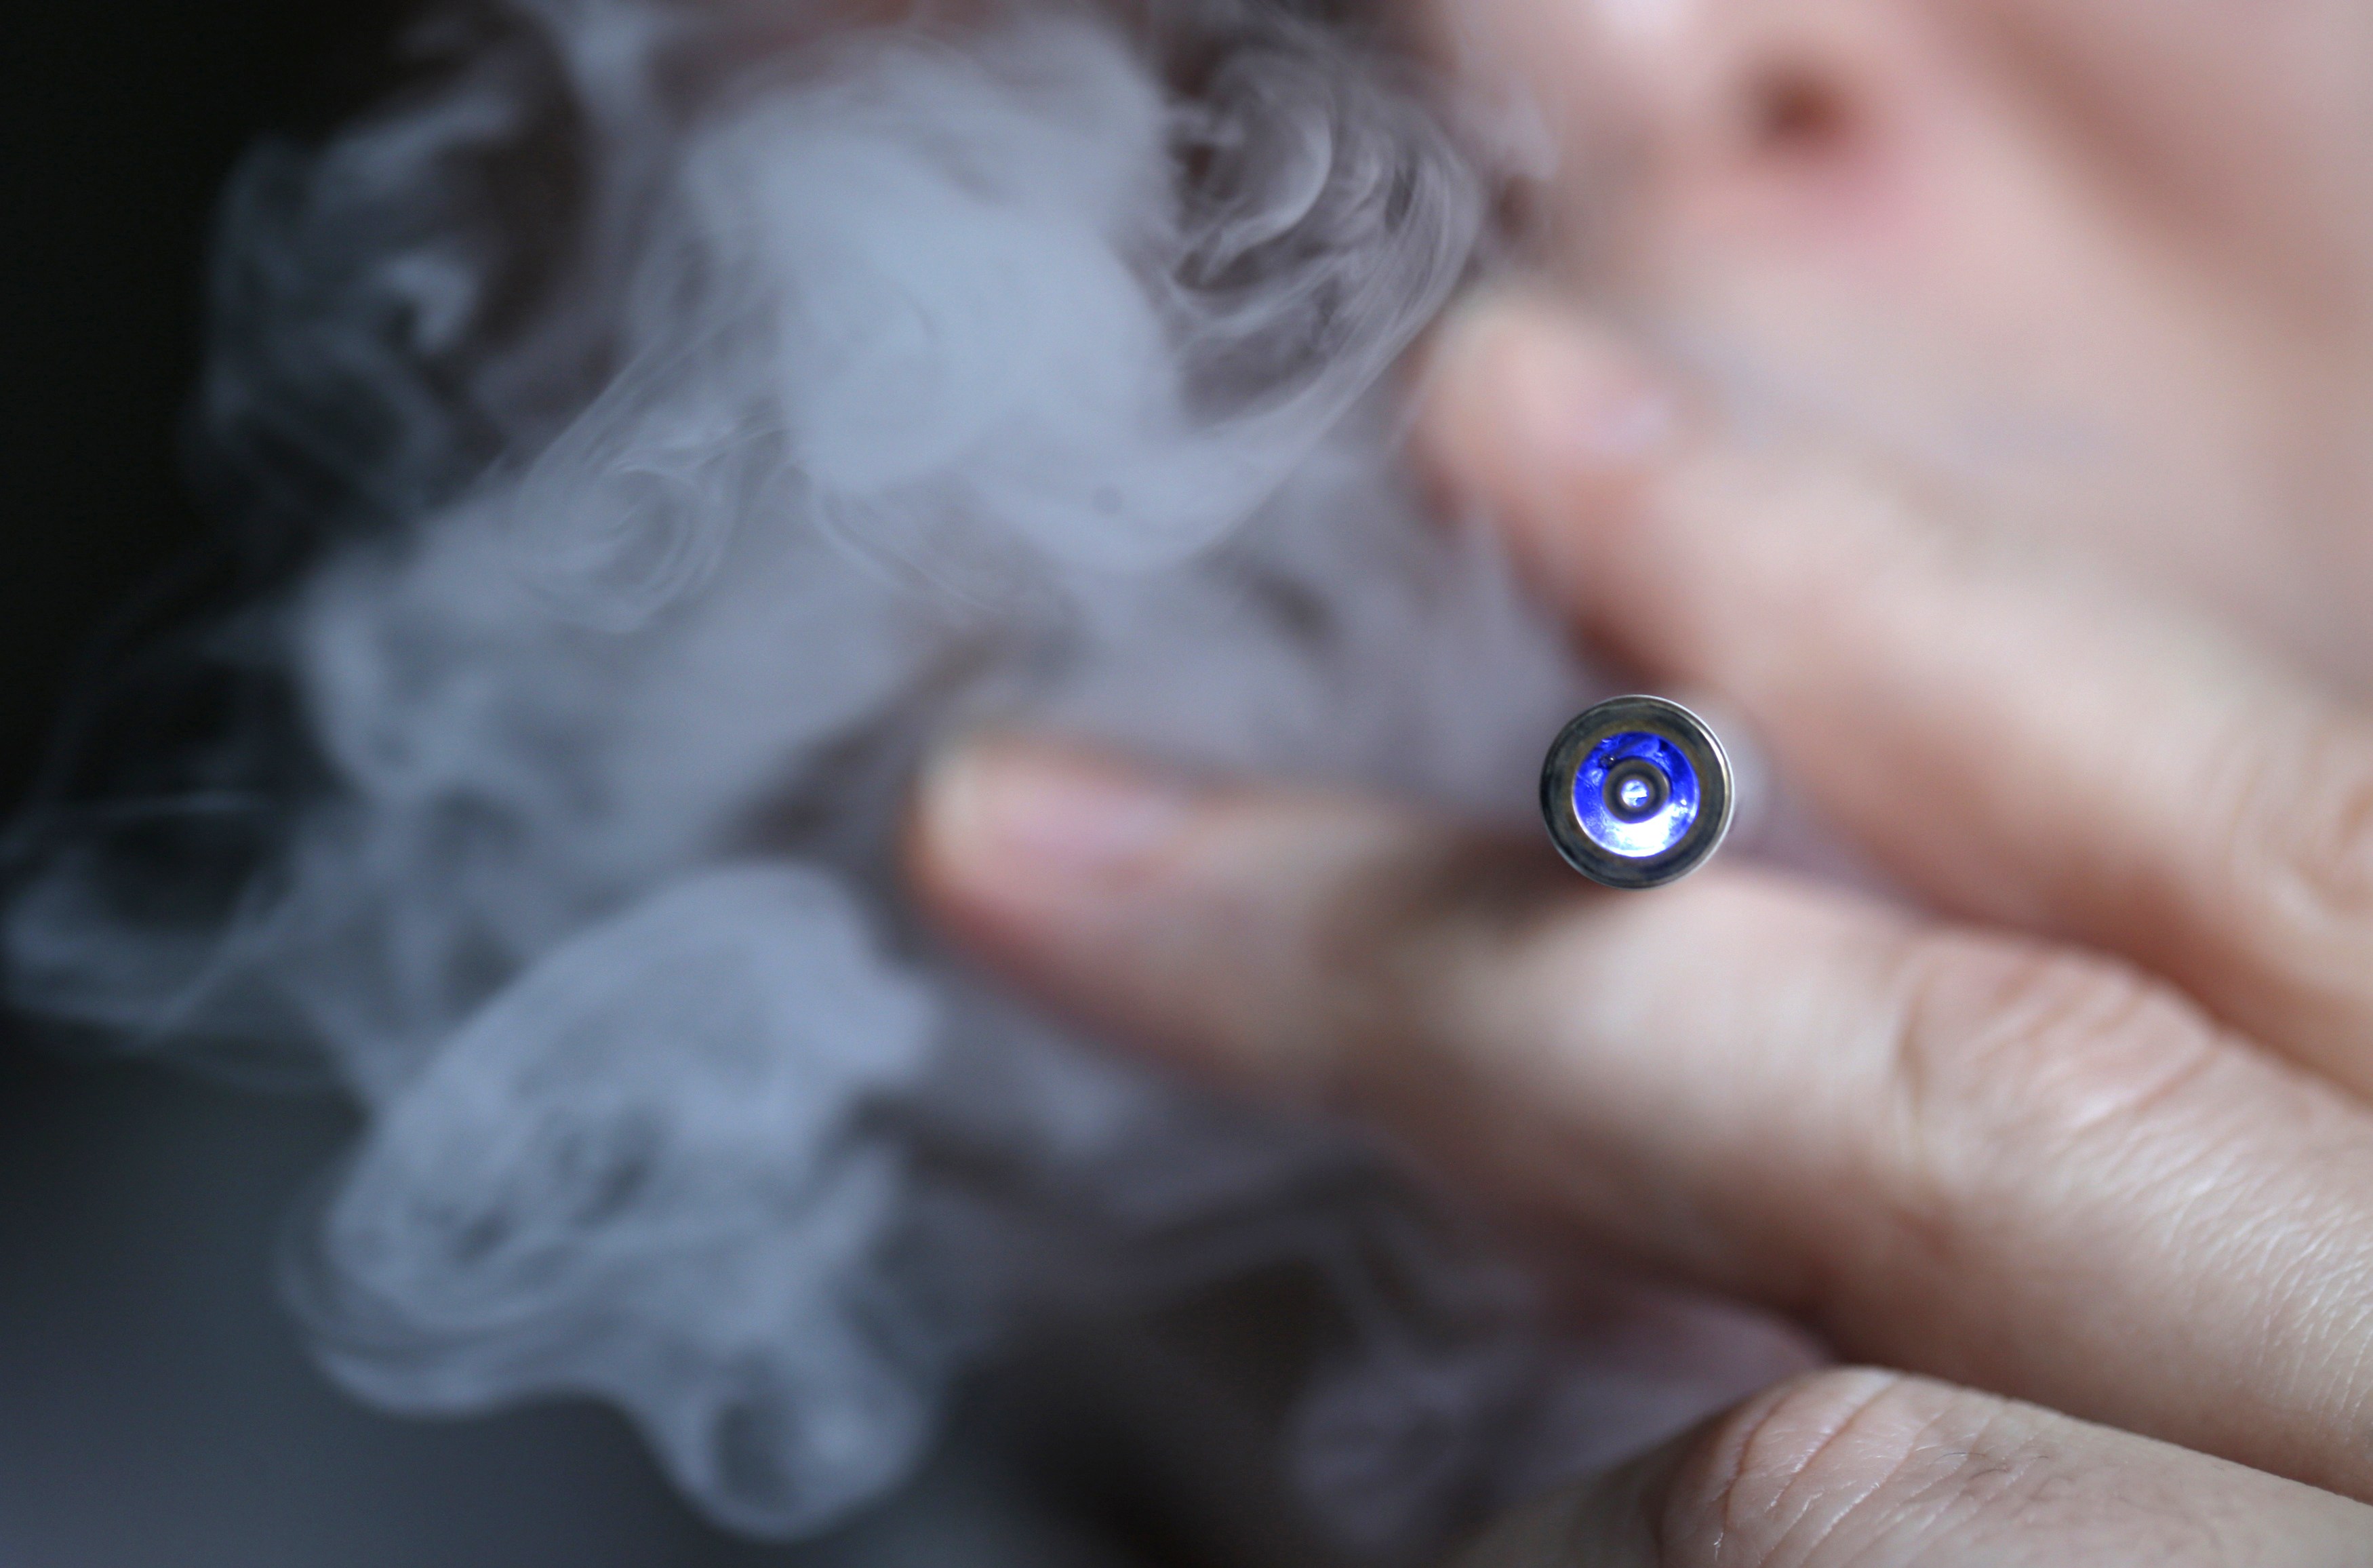 New fines, penalties for civil servants smoking on the job